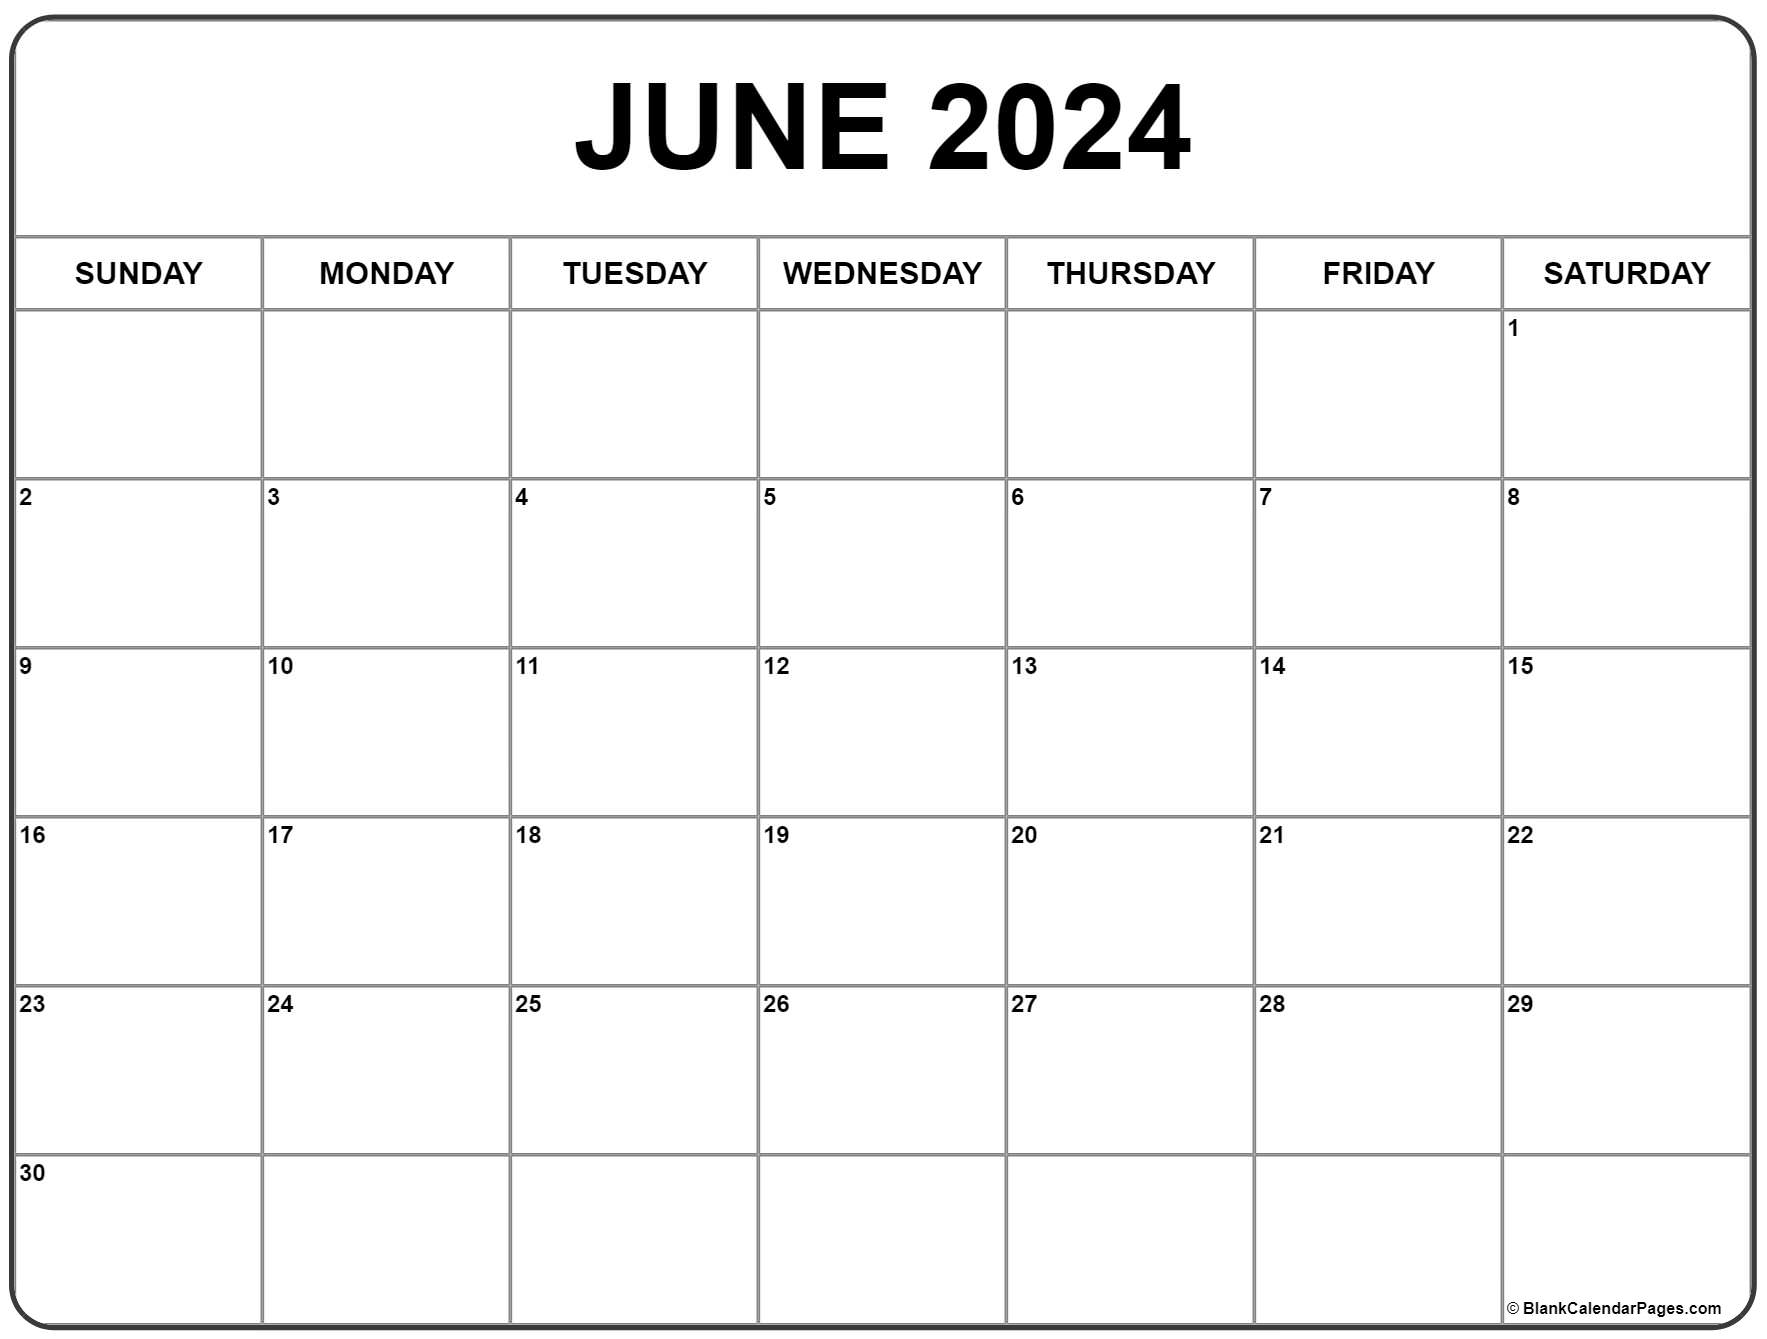 June 2024 Calendar | Free Printable Calendar for Printable Free June 2024 Calendar